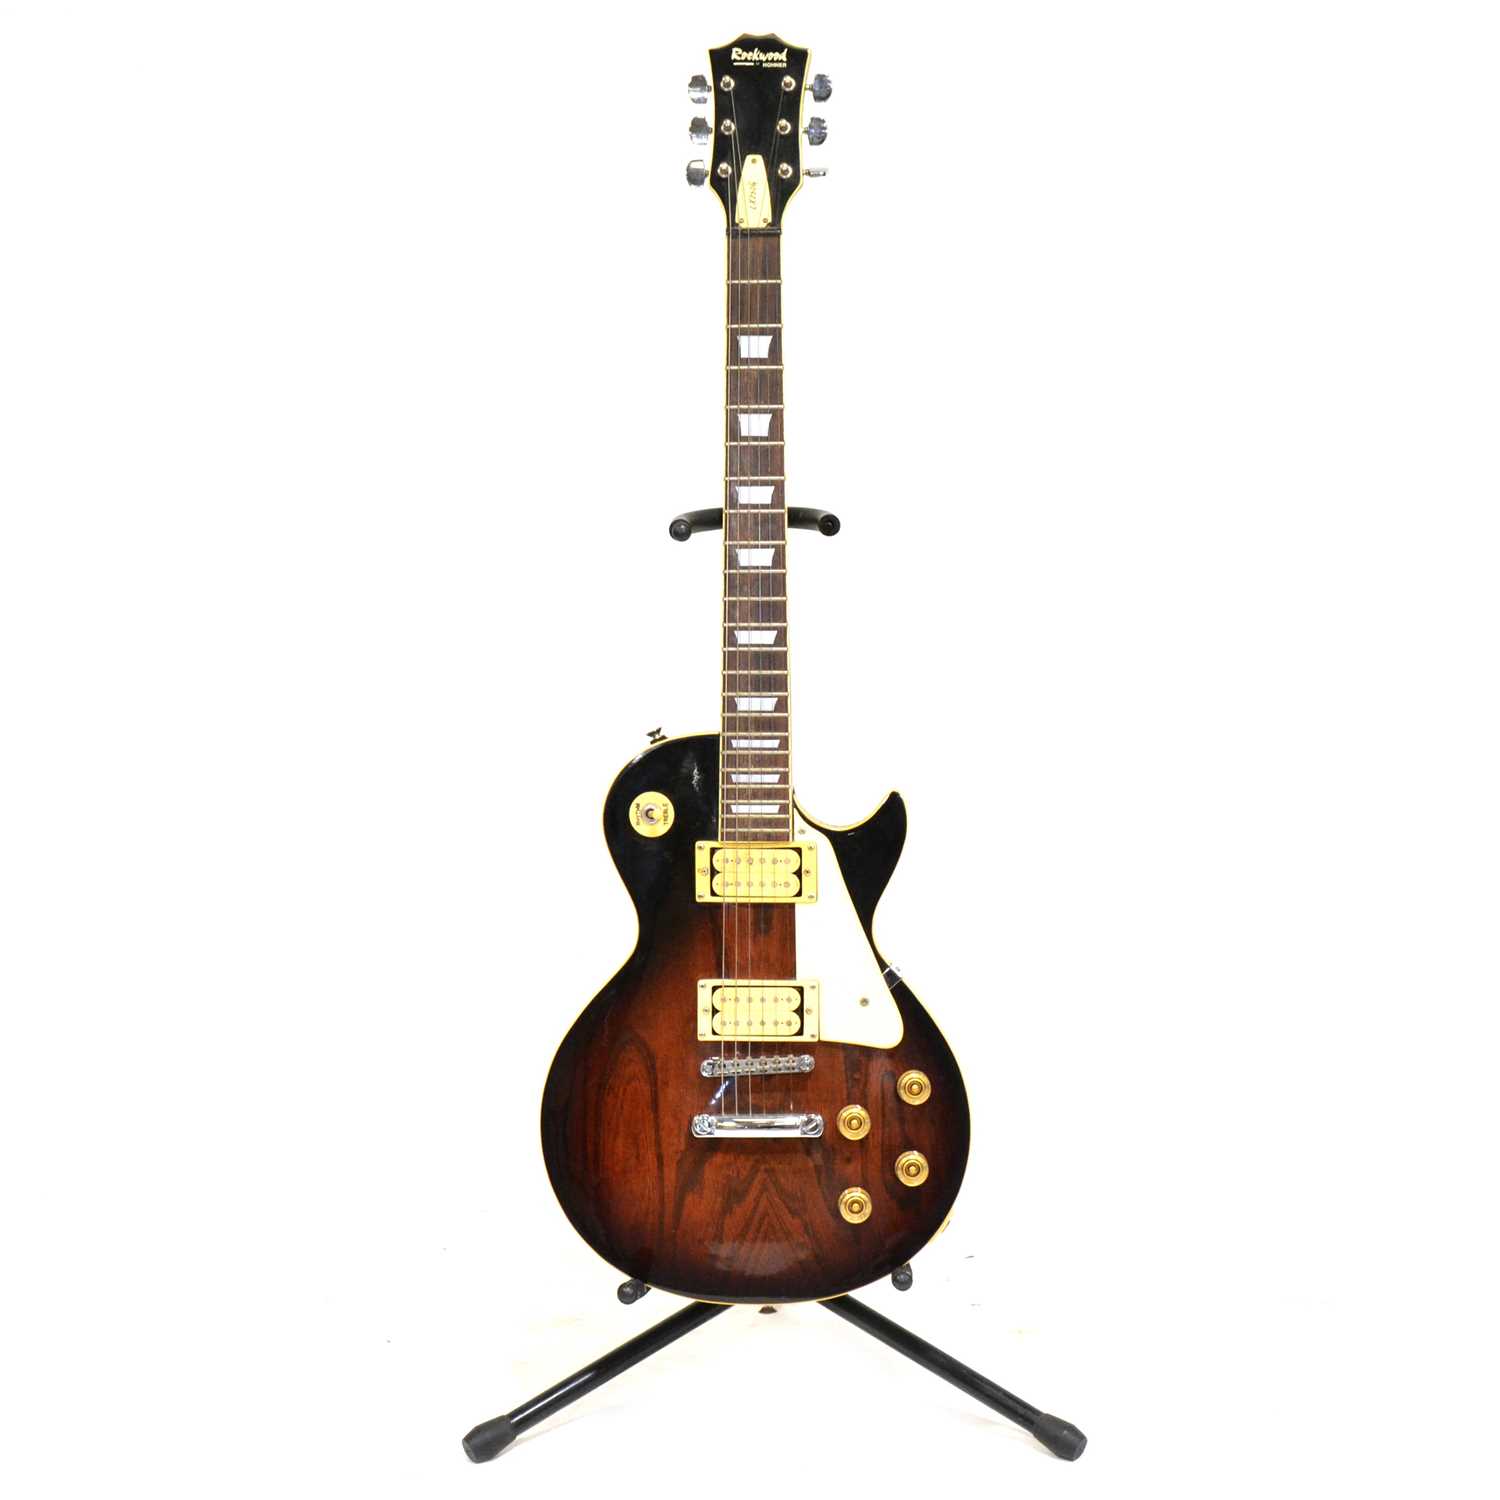 Rockwood LX250G six string electric guitar